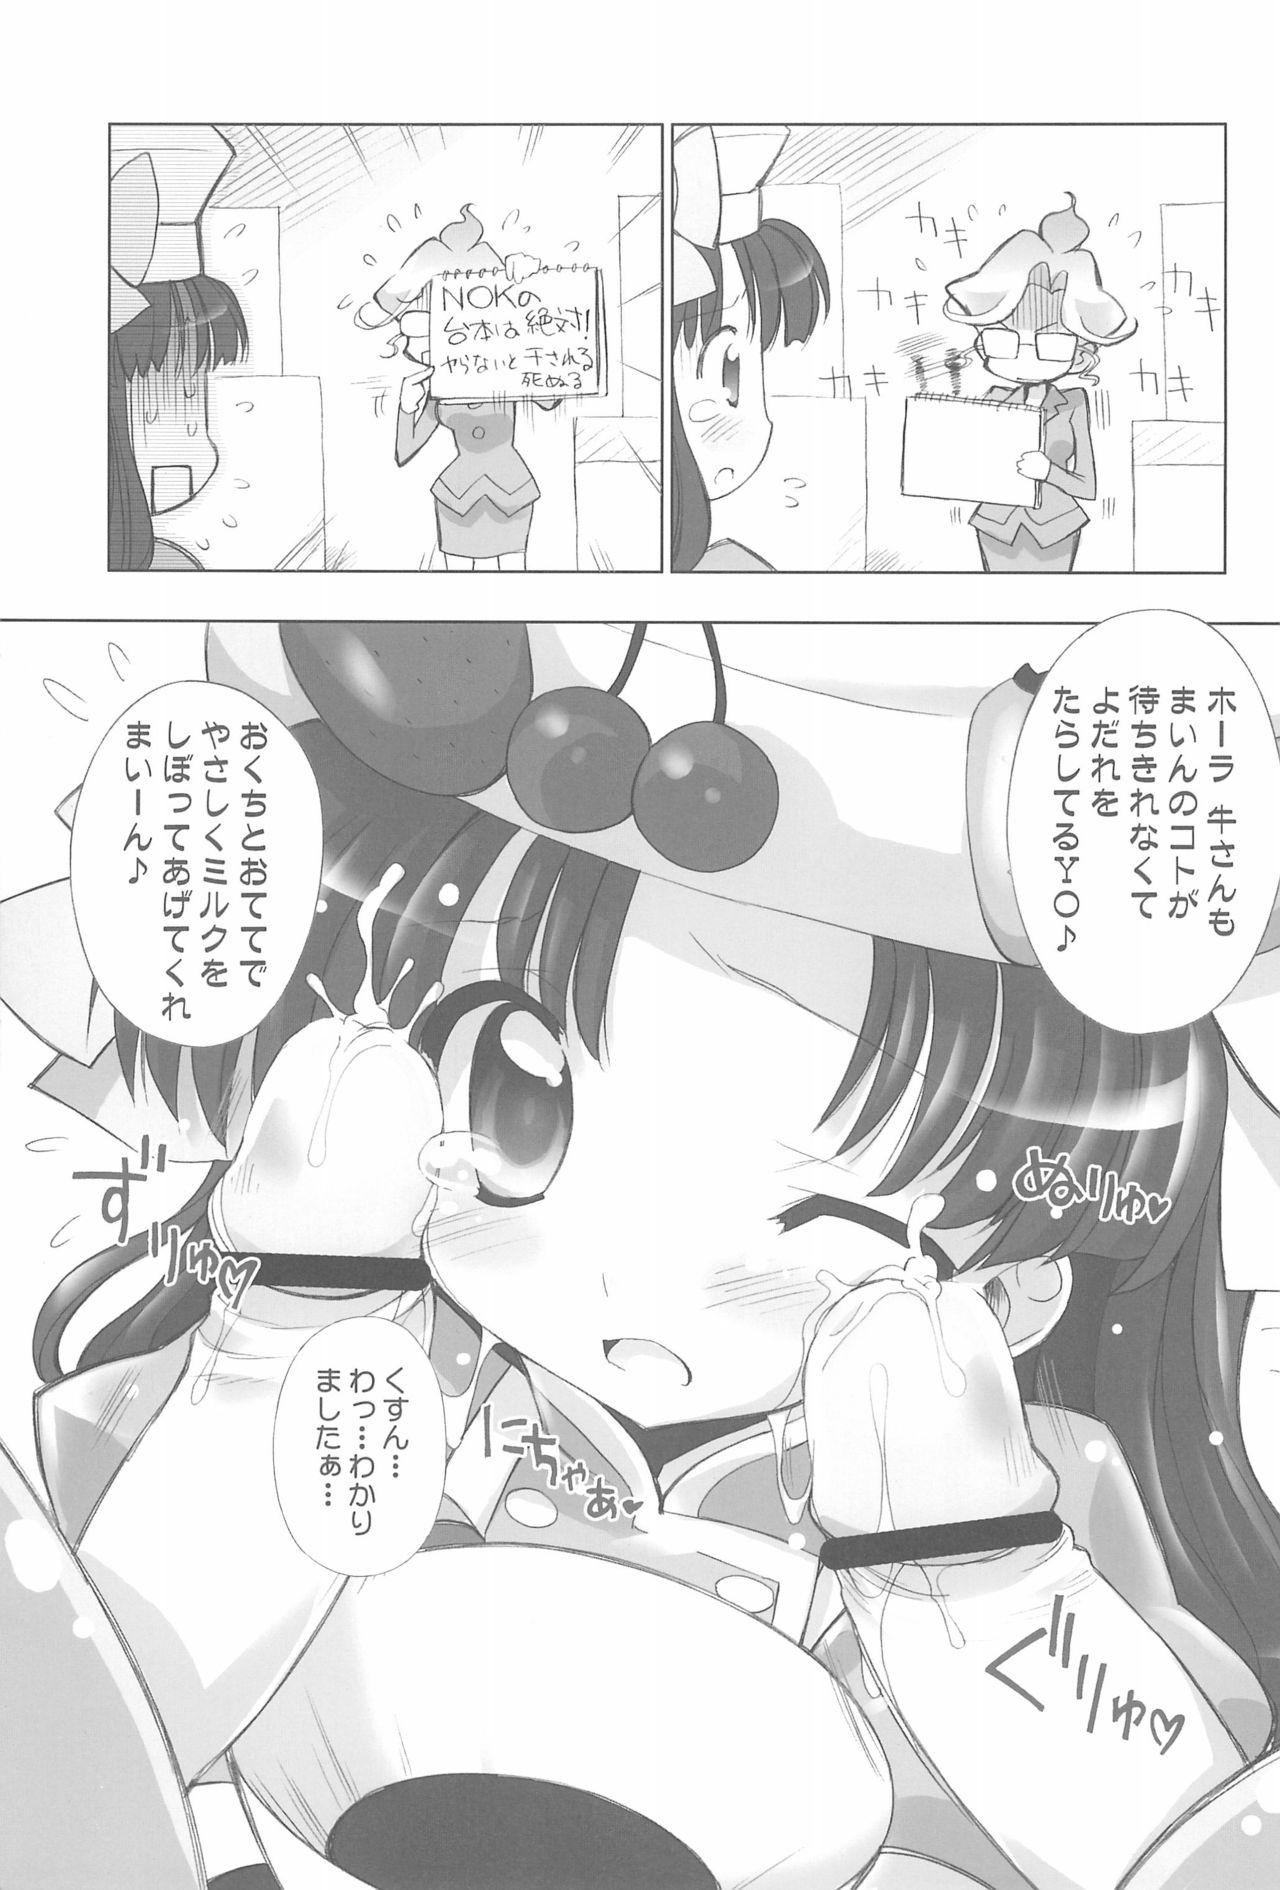 Threeway Kyou no Okazu 10-pun Cooking - Cooking idol ai mai main Naked - Page 7